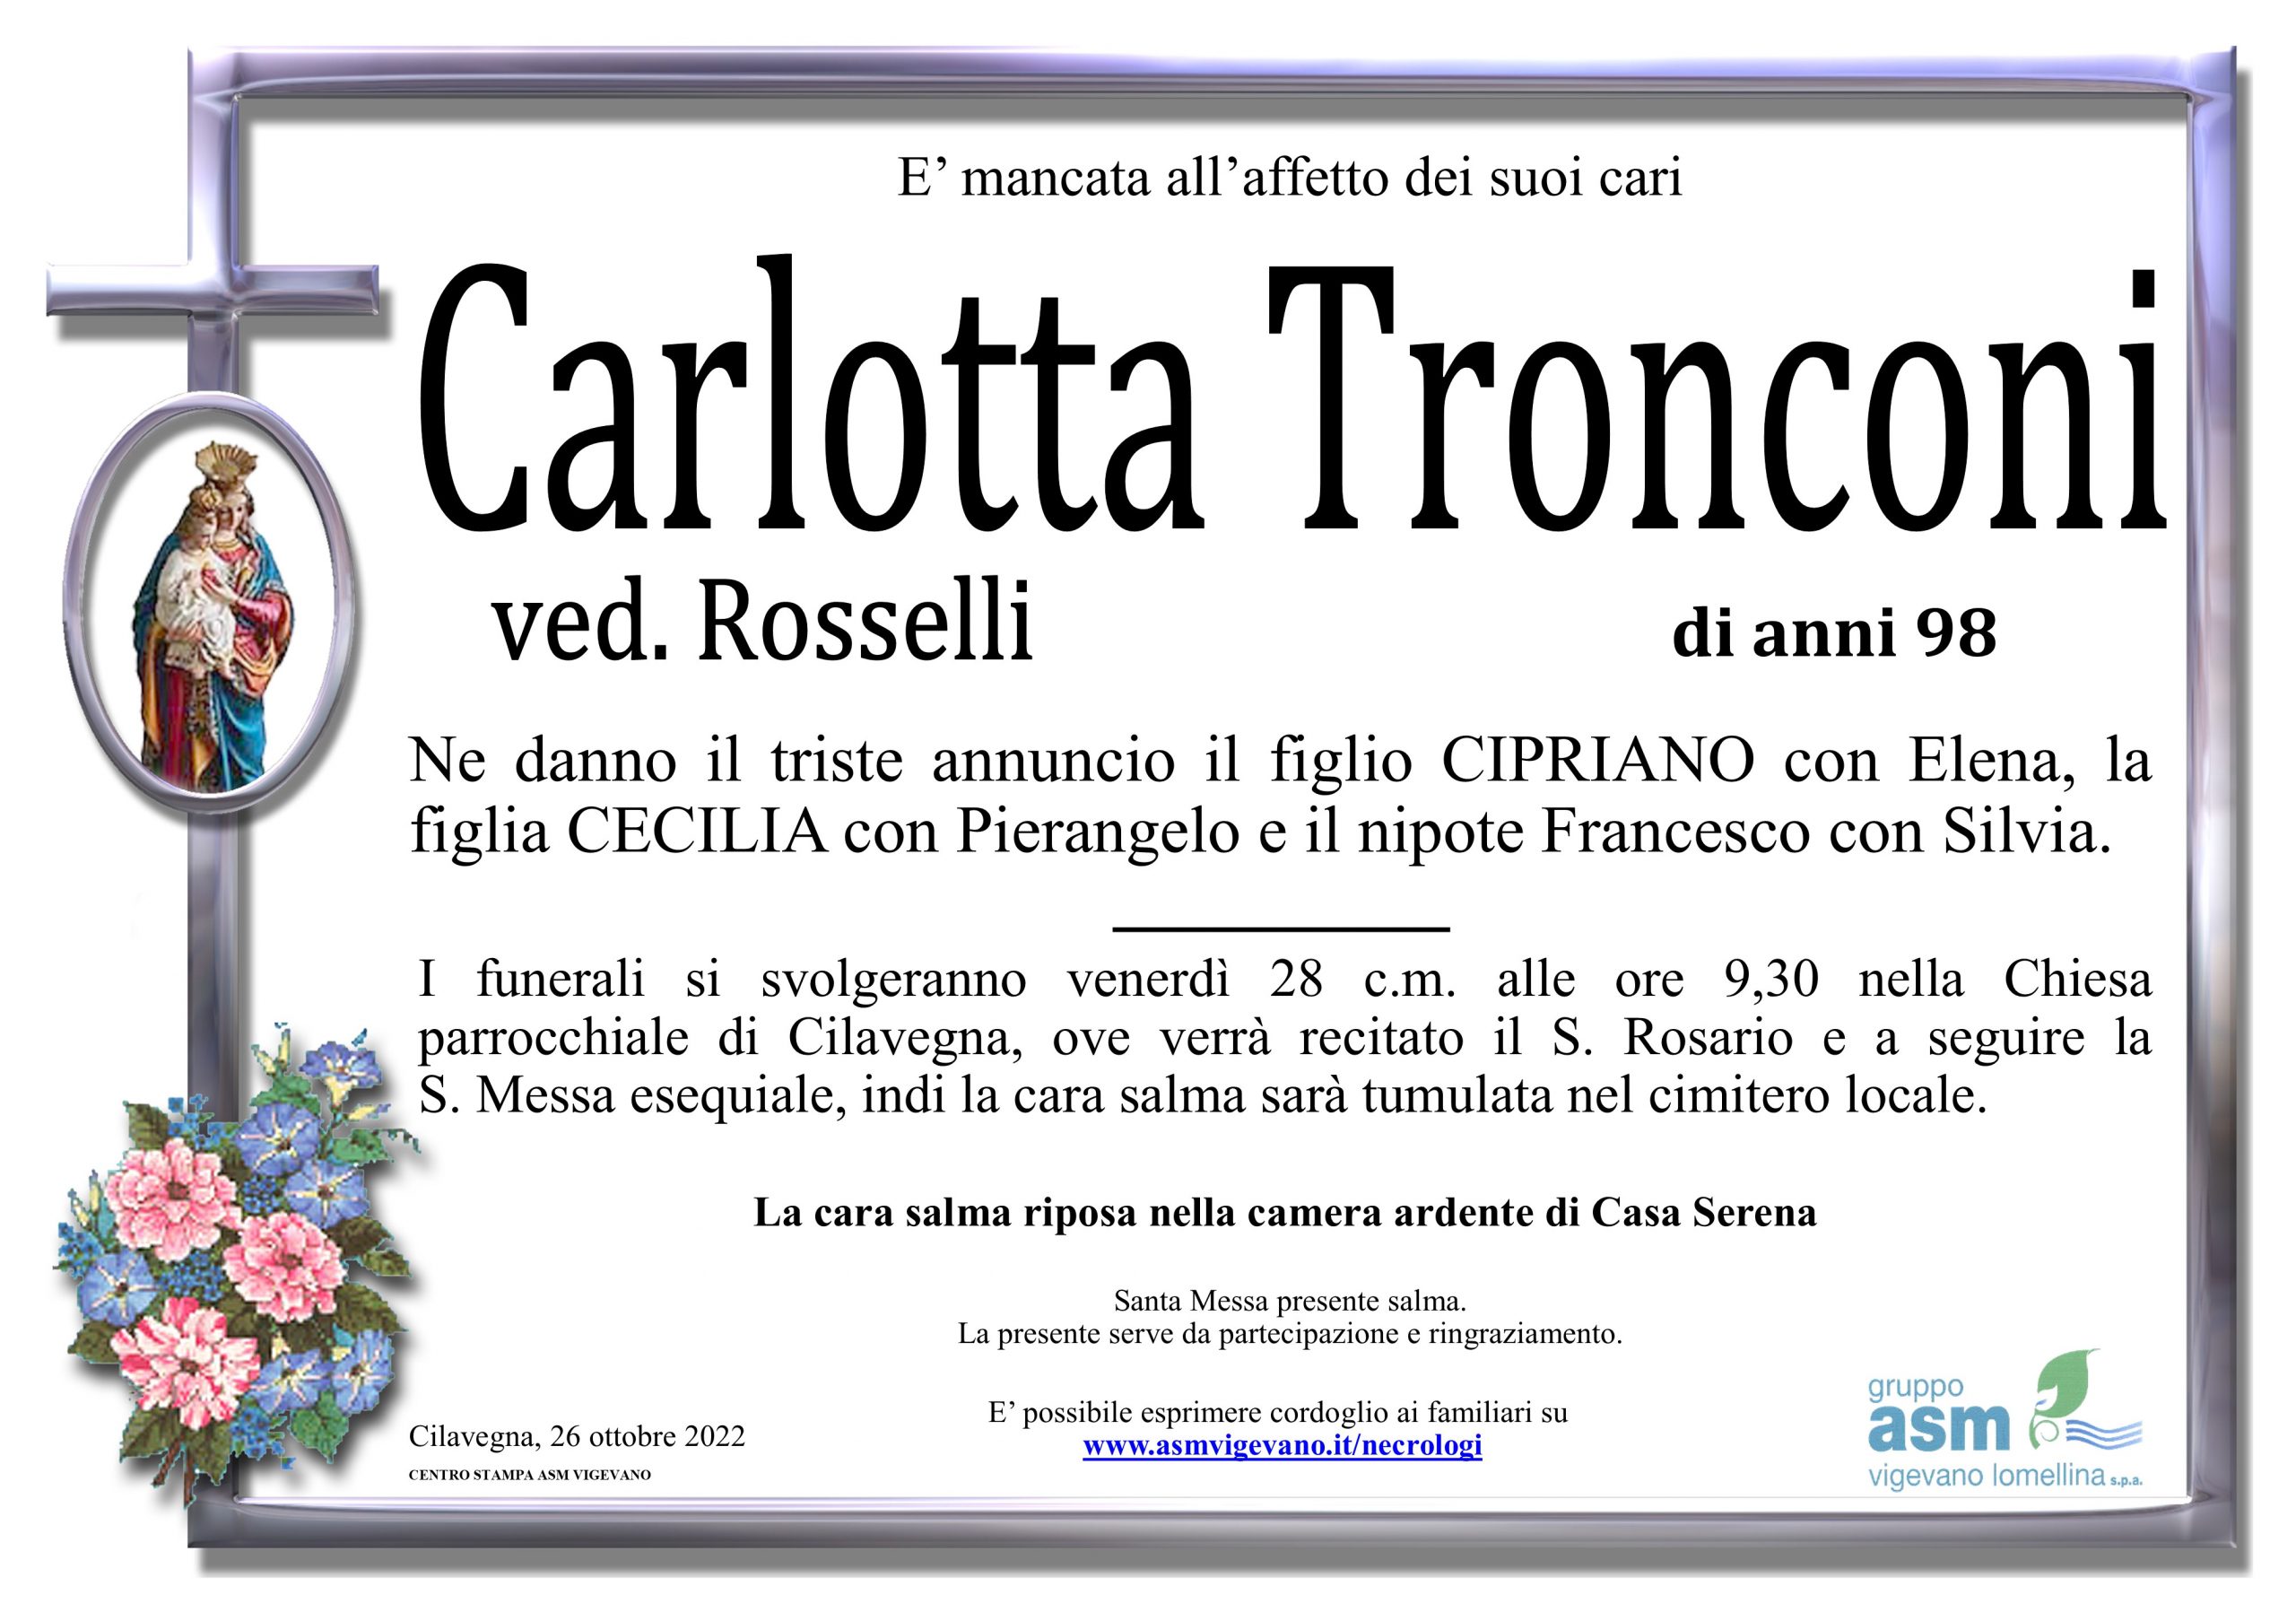 Carlotta Tronconi